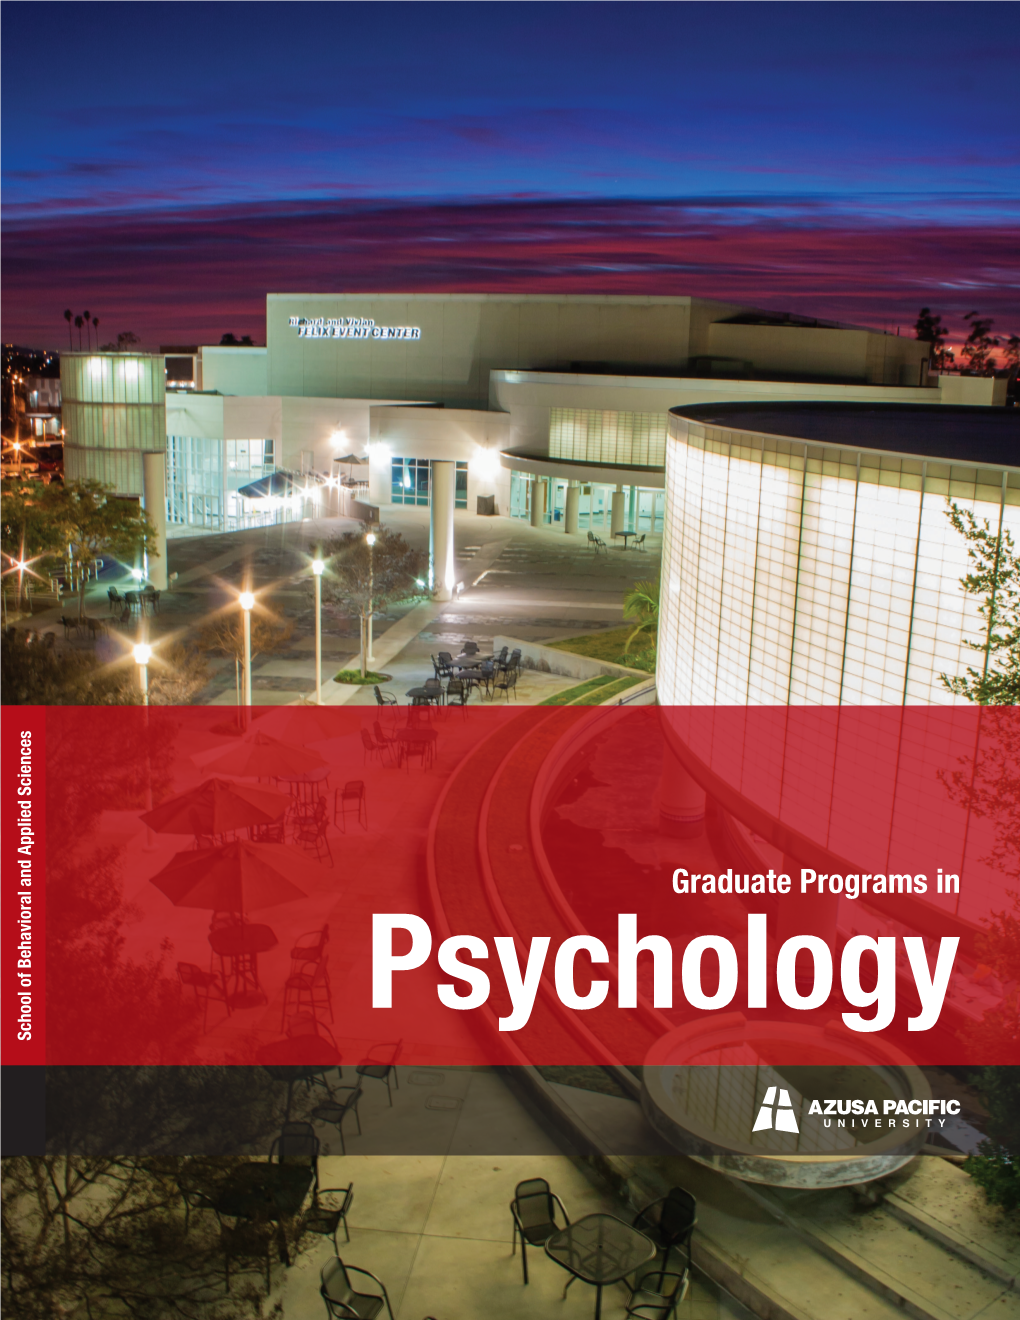 Graduate Programs in Psychology